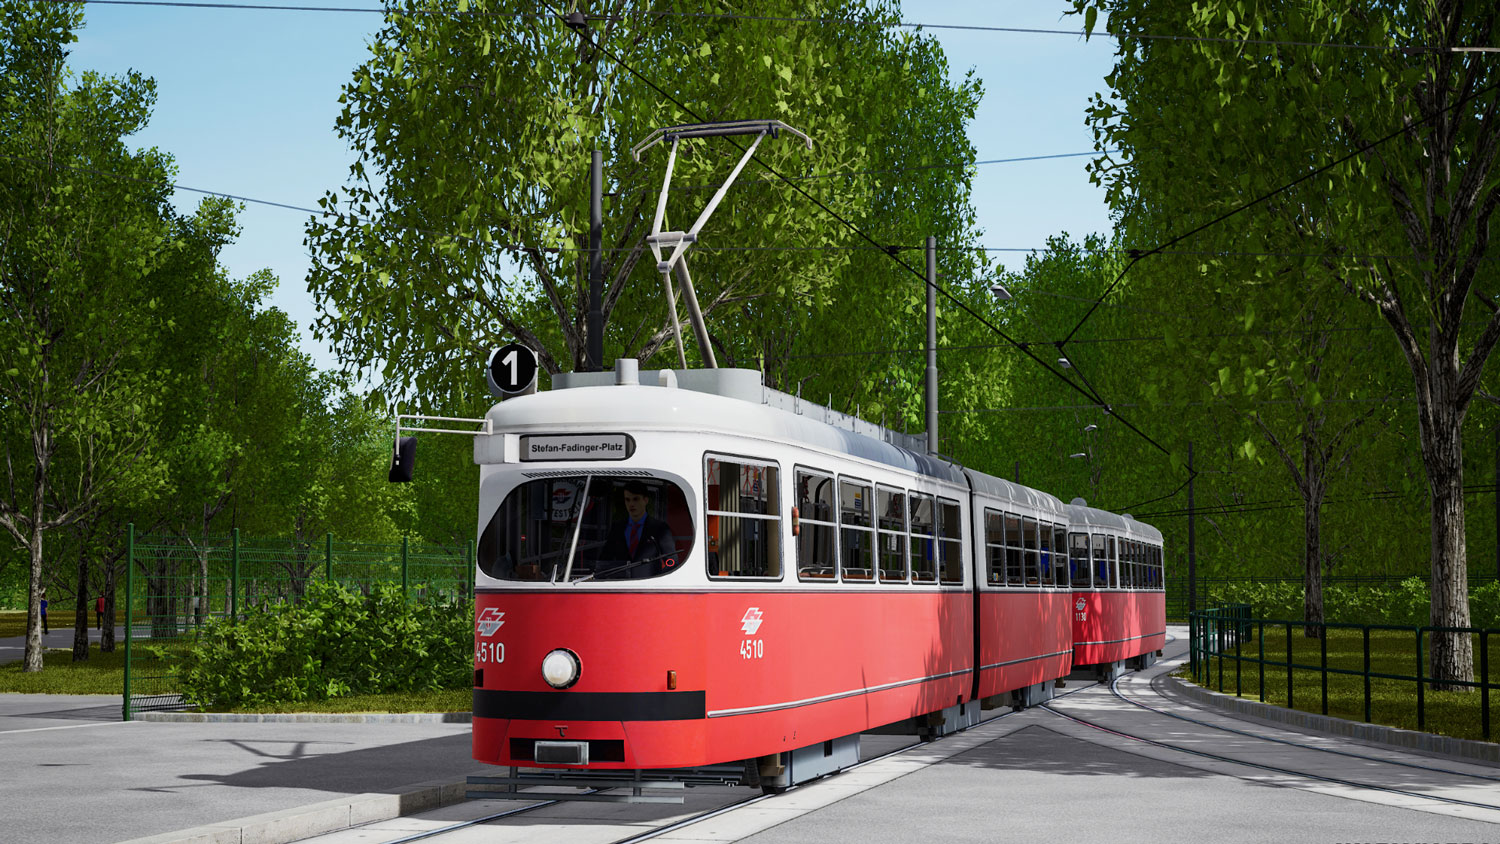 TramSim DLC Type E1